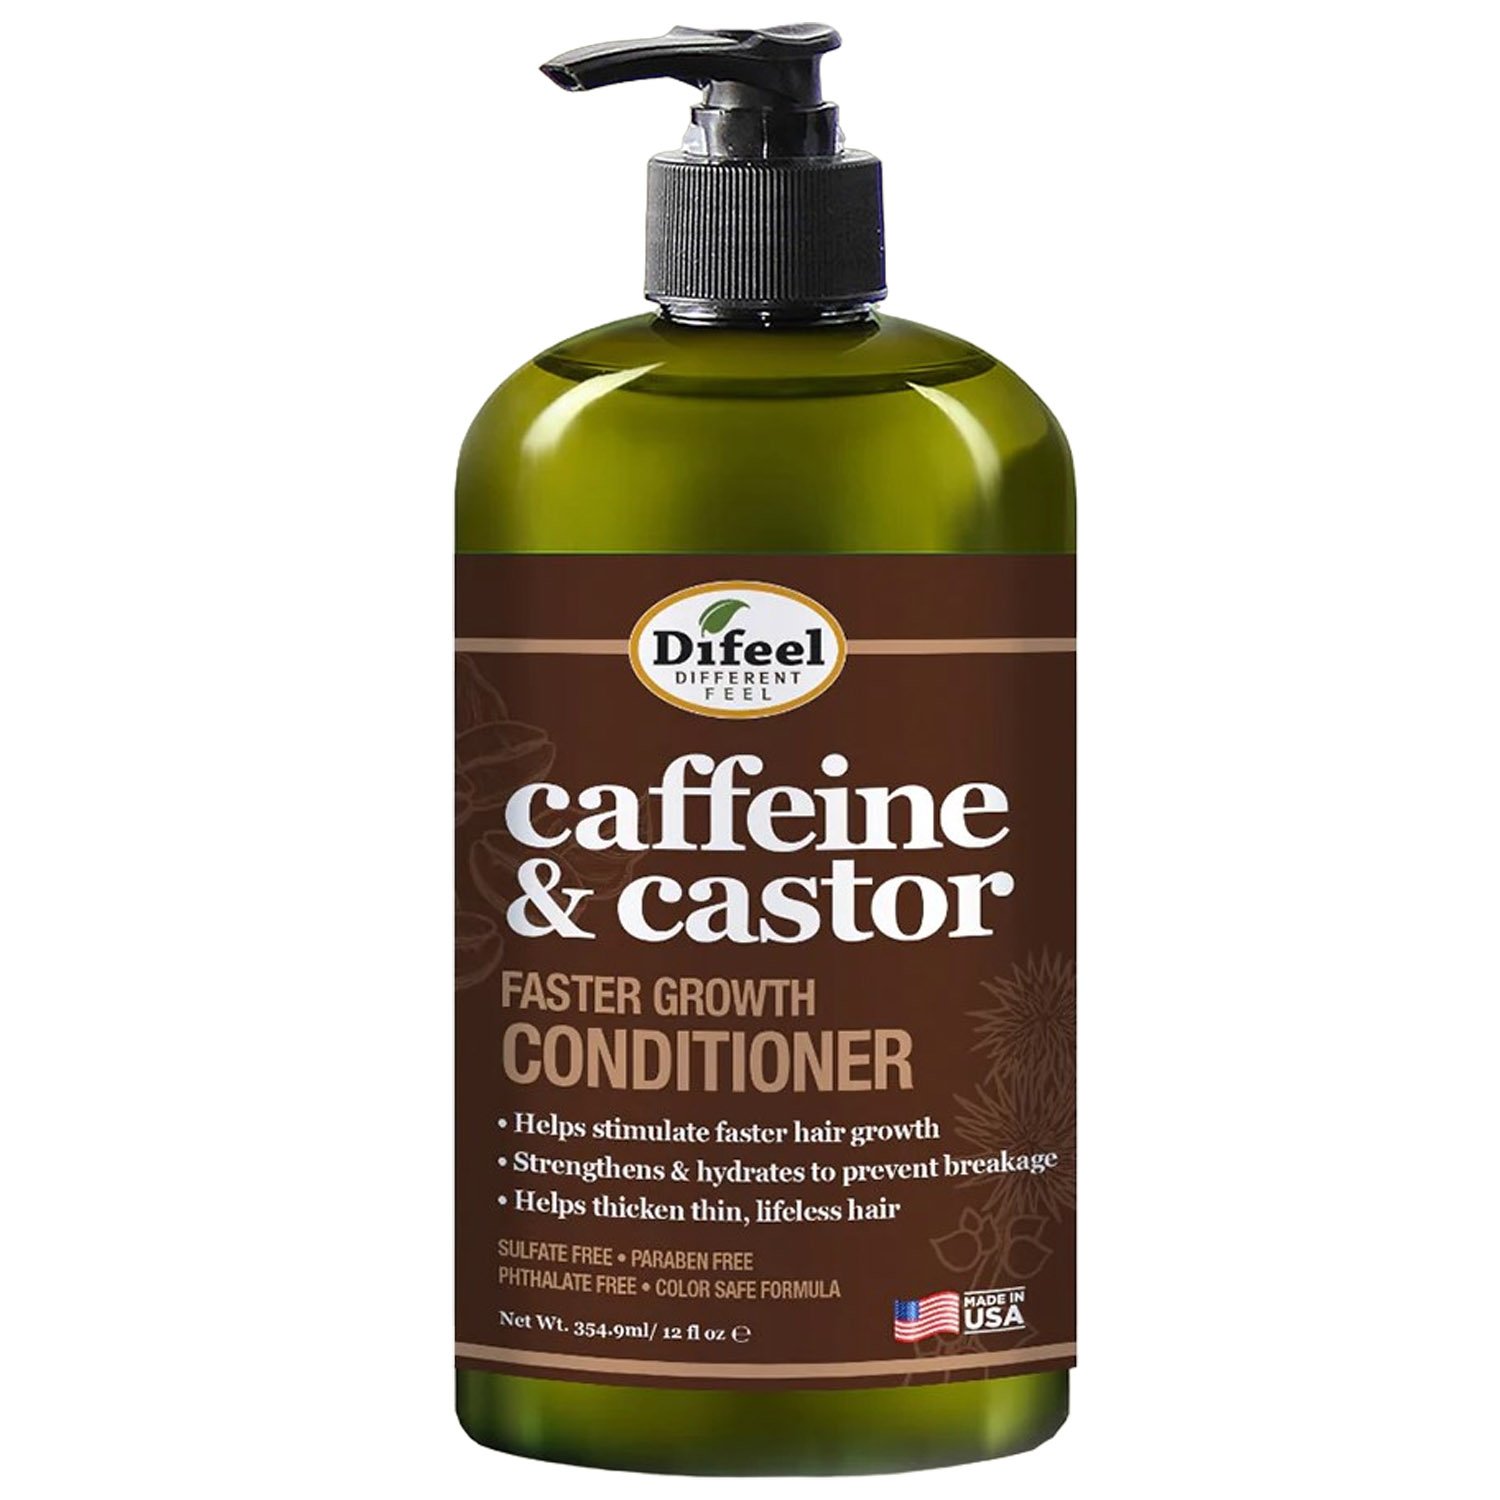 Кондиционер для волос Difeel Caffeine and Castor Conditioner for Faster Hair Growth, 355 мл - фото 1